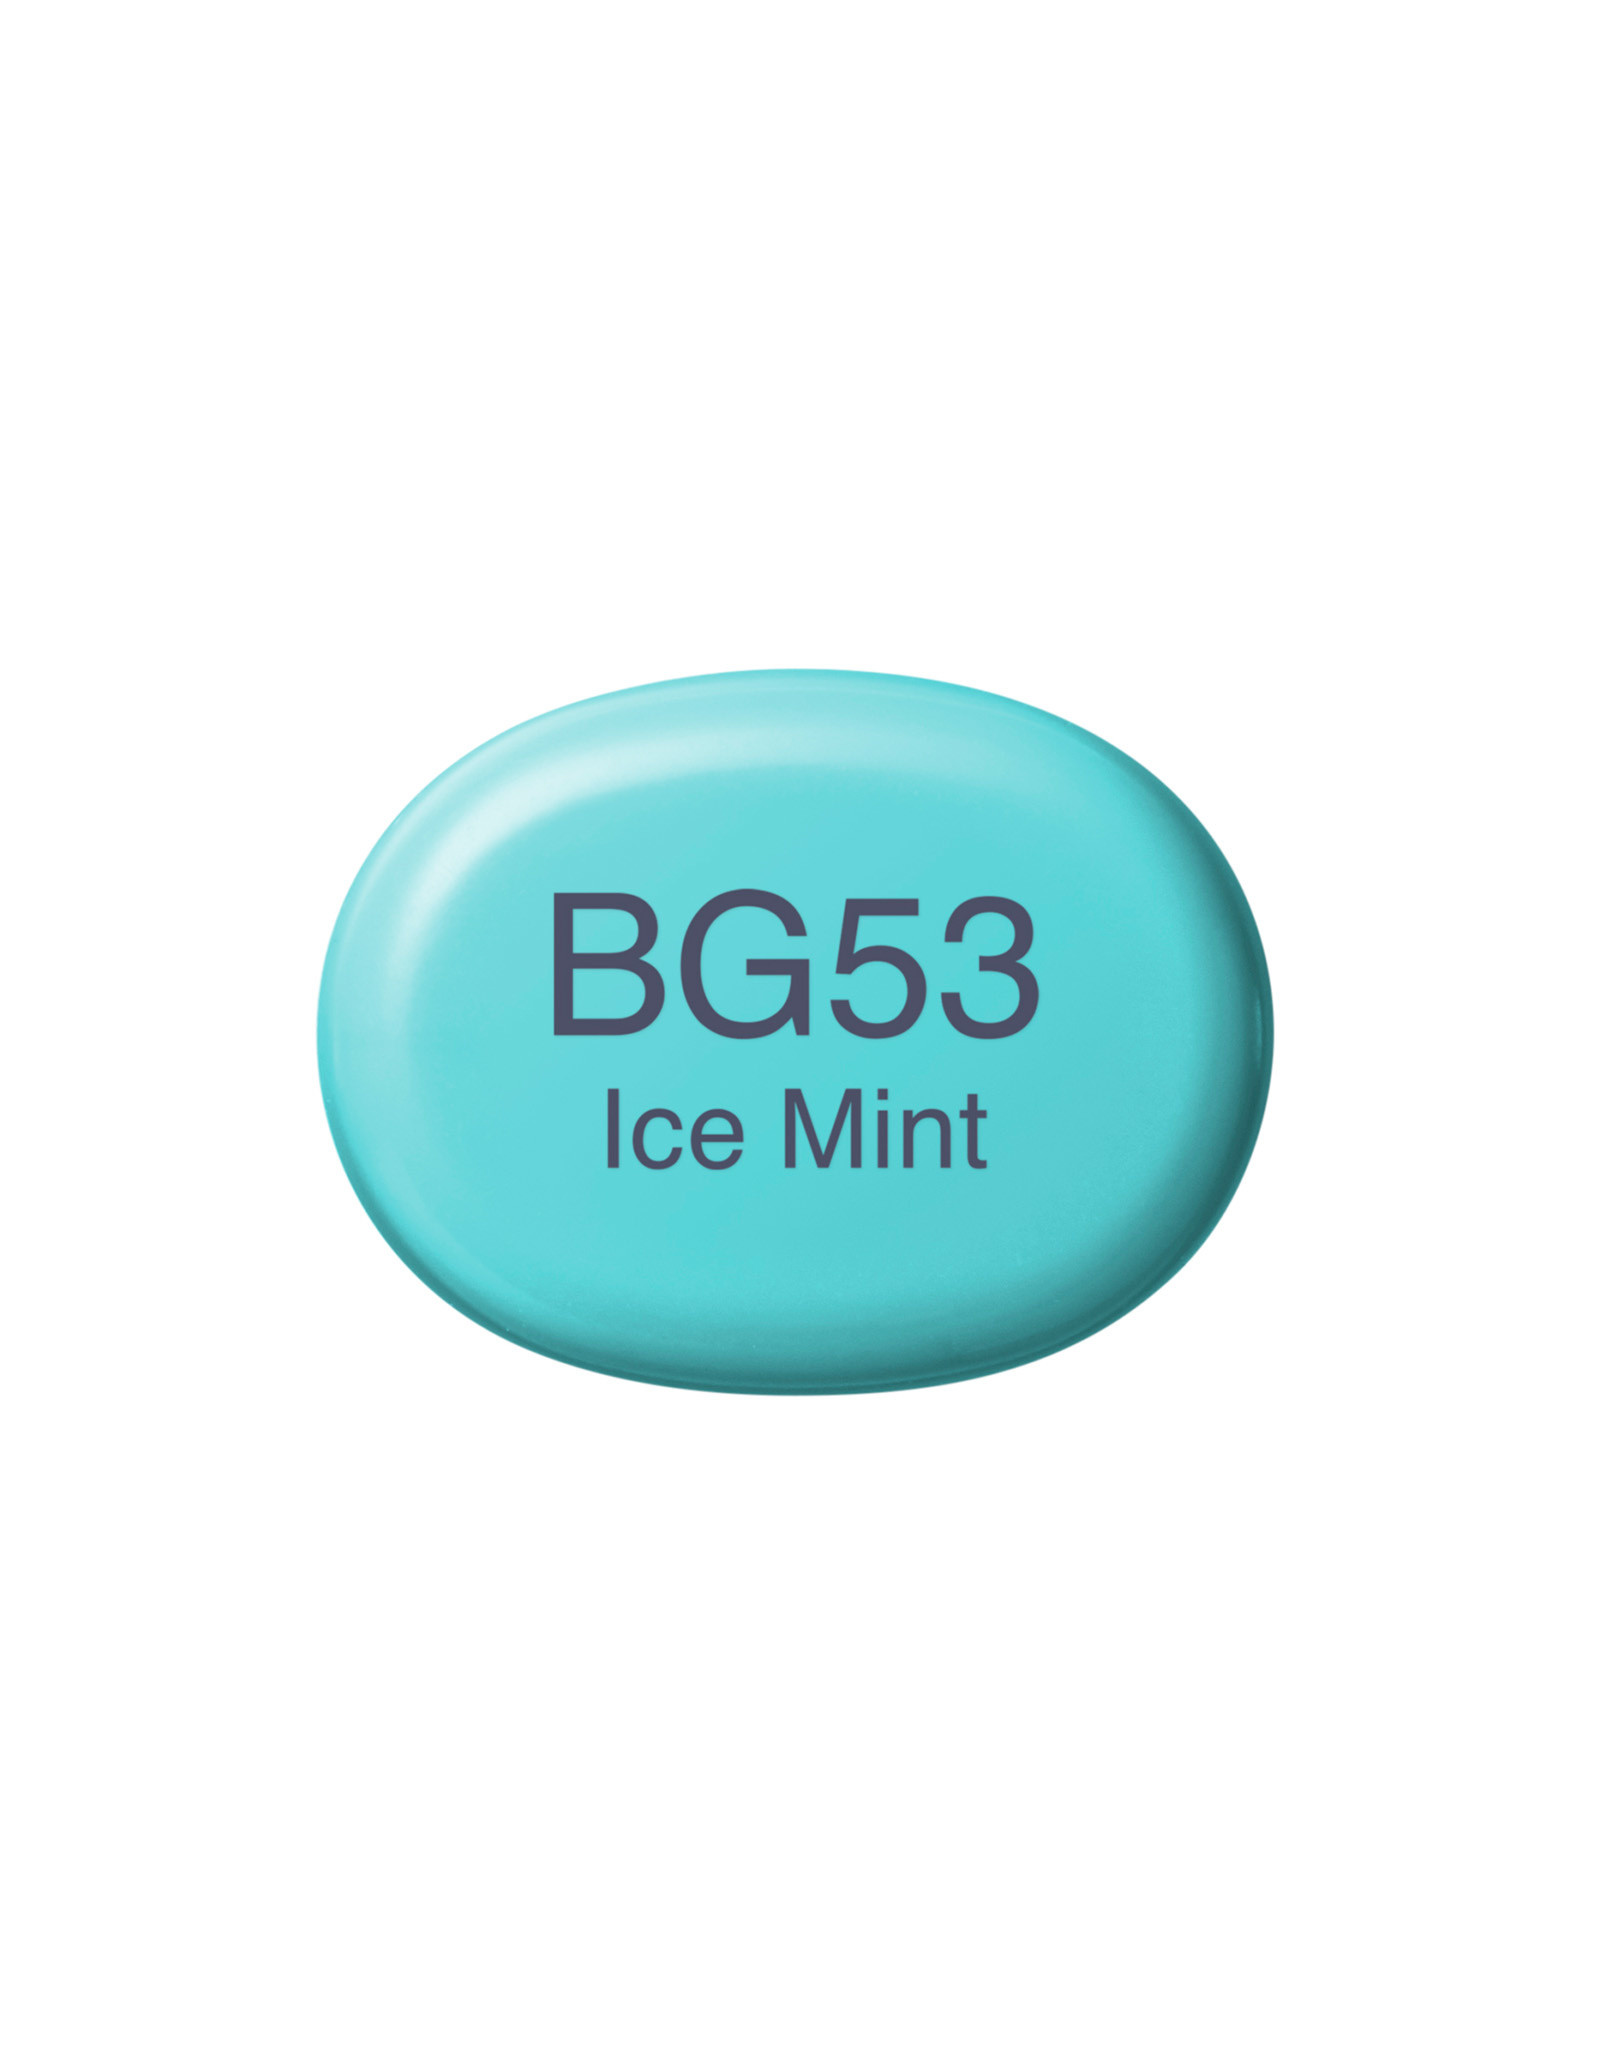 COPIC COPIC Sketch Marker BG53 Ice Mint